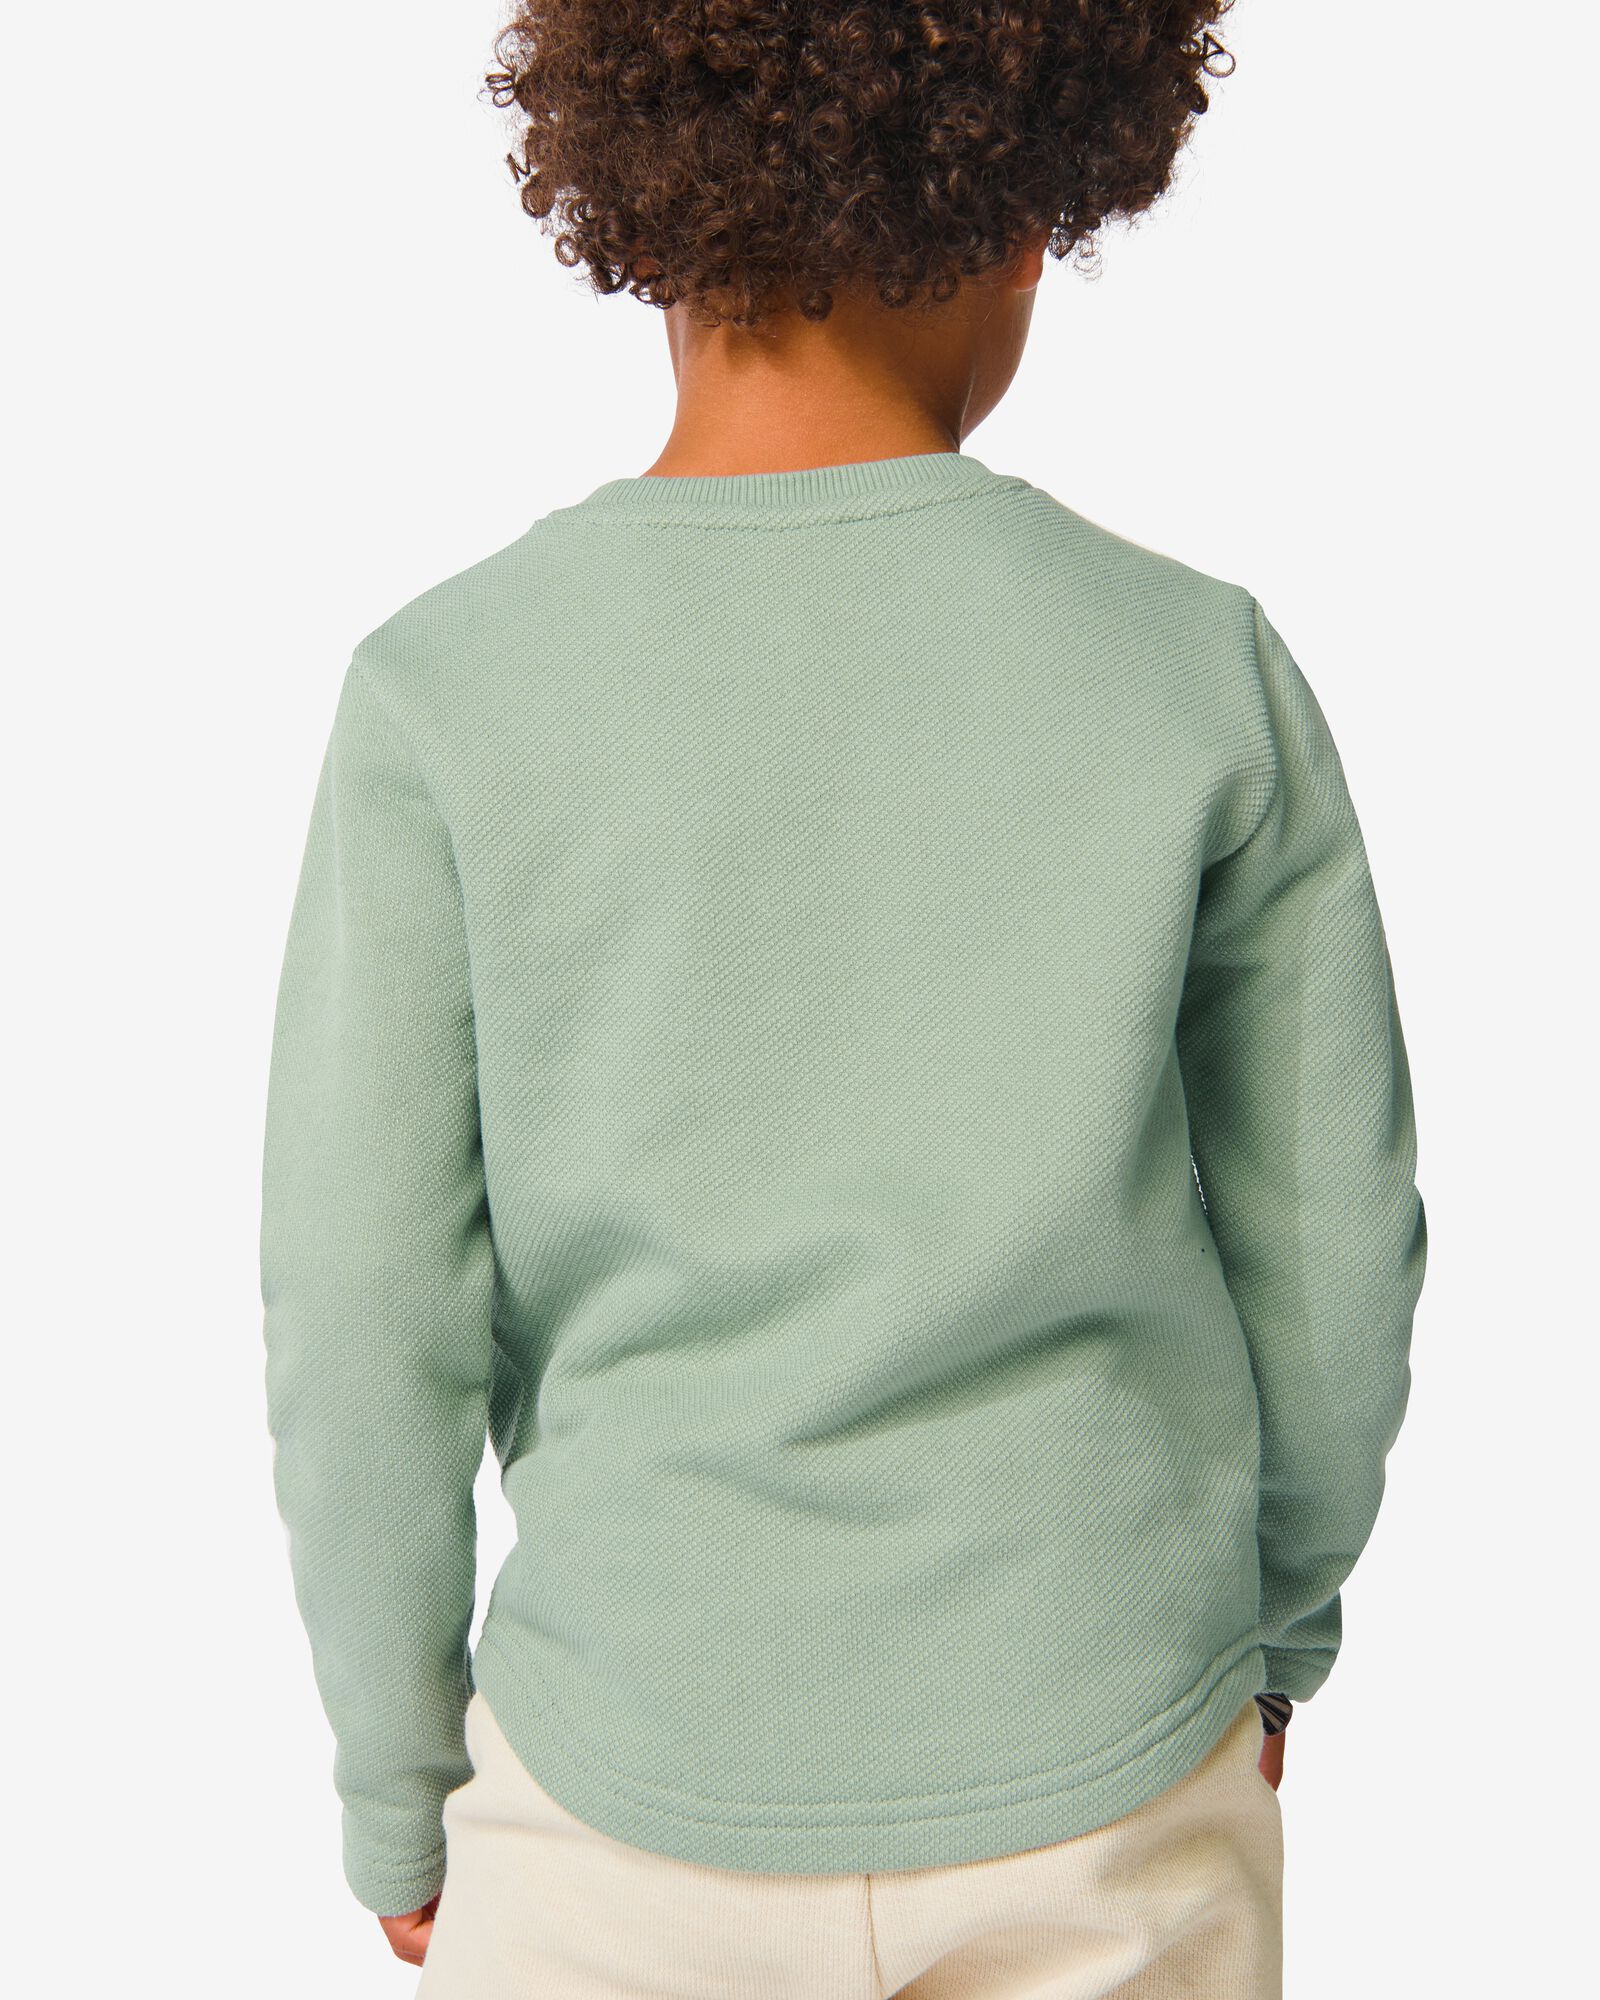 kinder sweater structuur groen - 1000032472 - HEMA